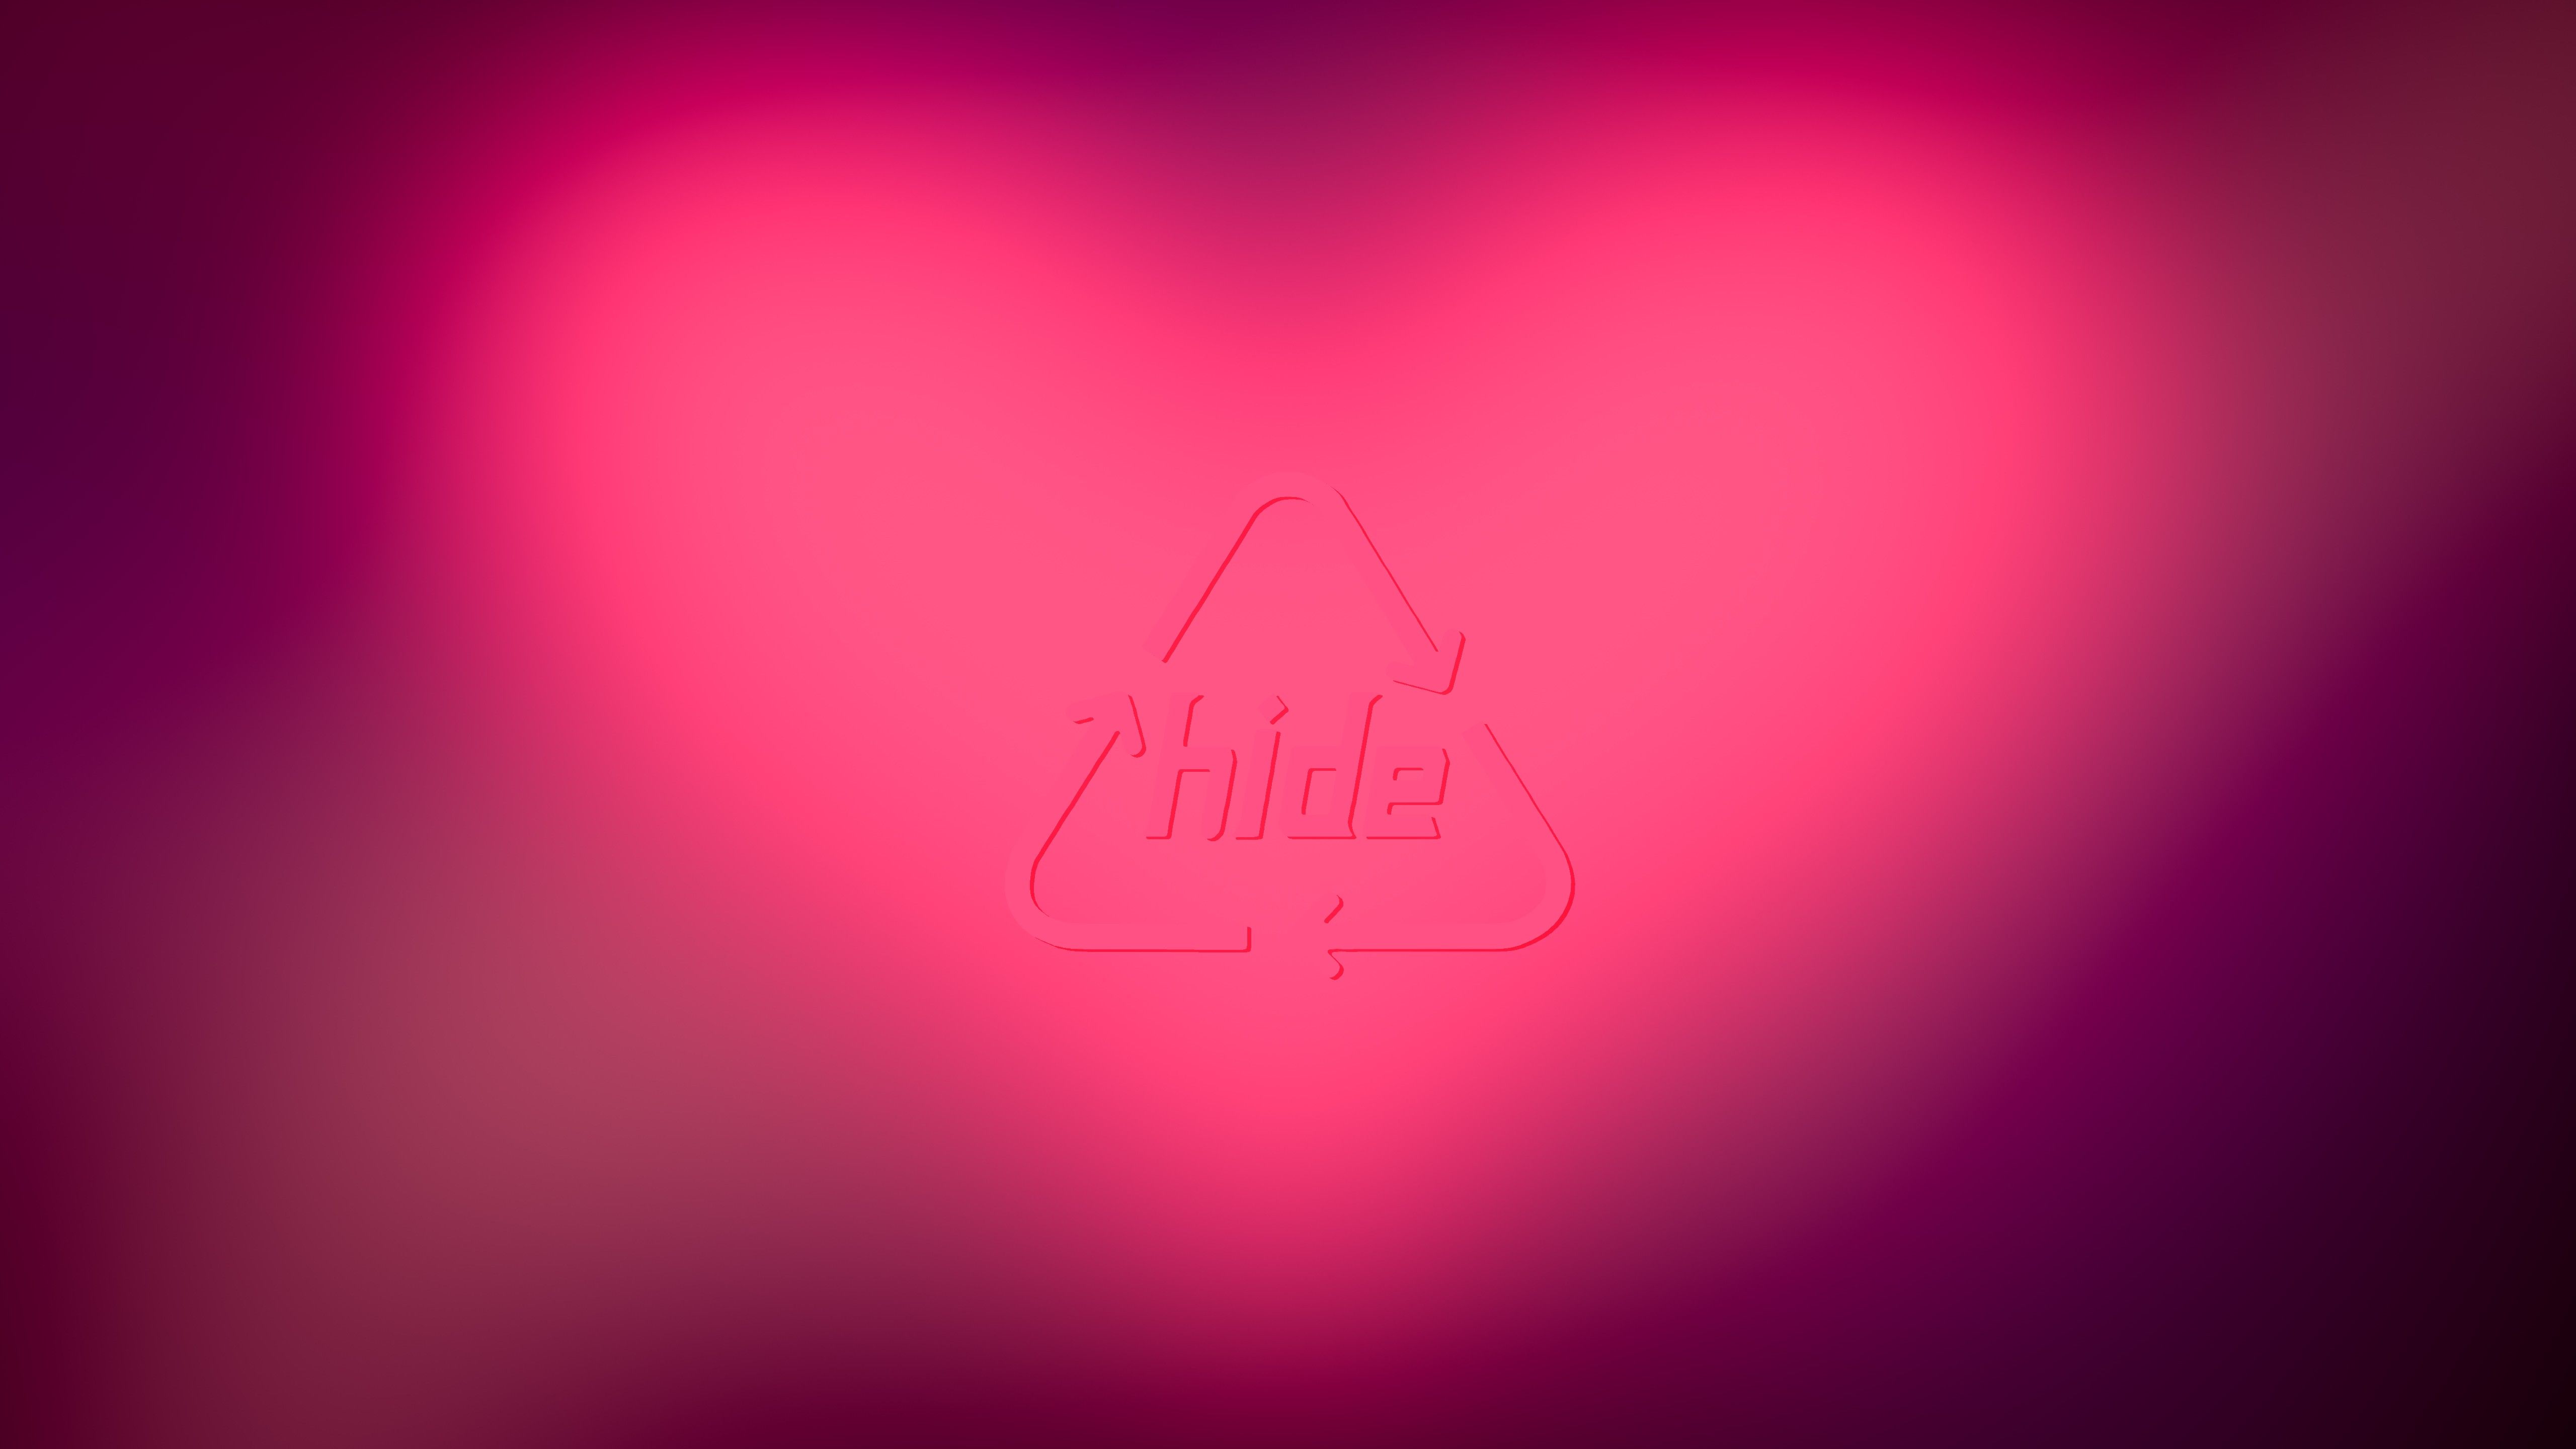 hide musician logo edit pink wallpaper